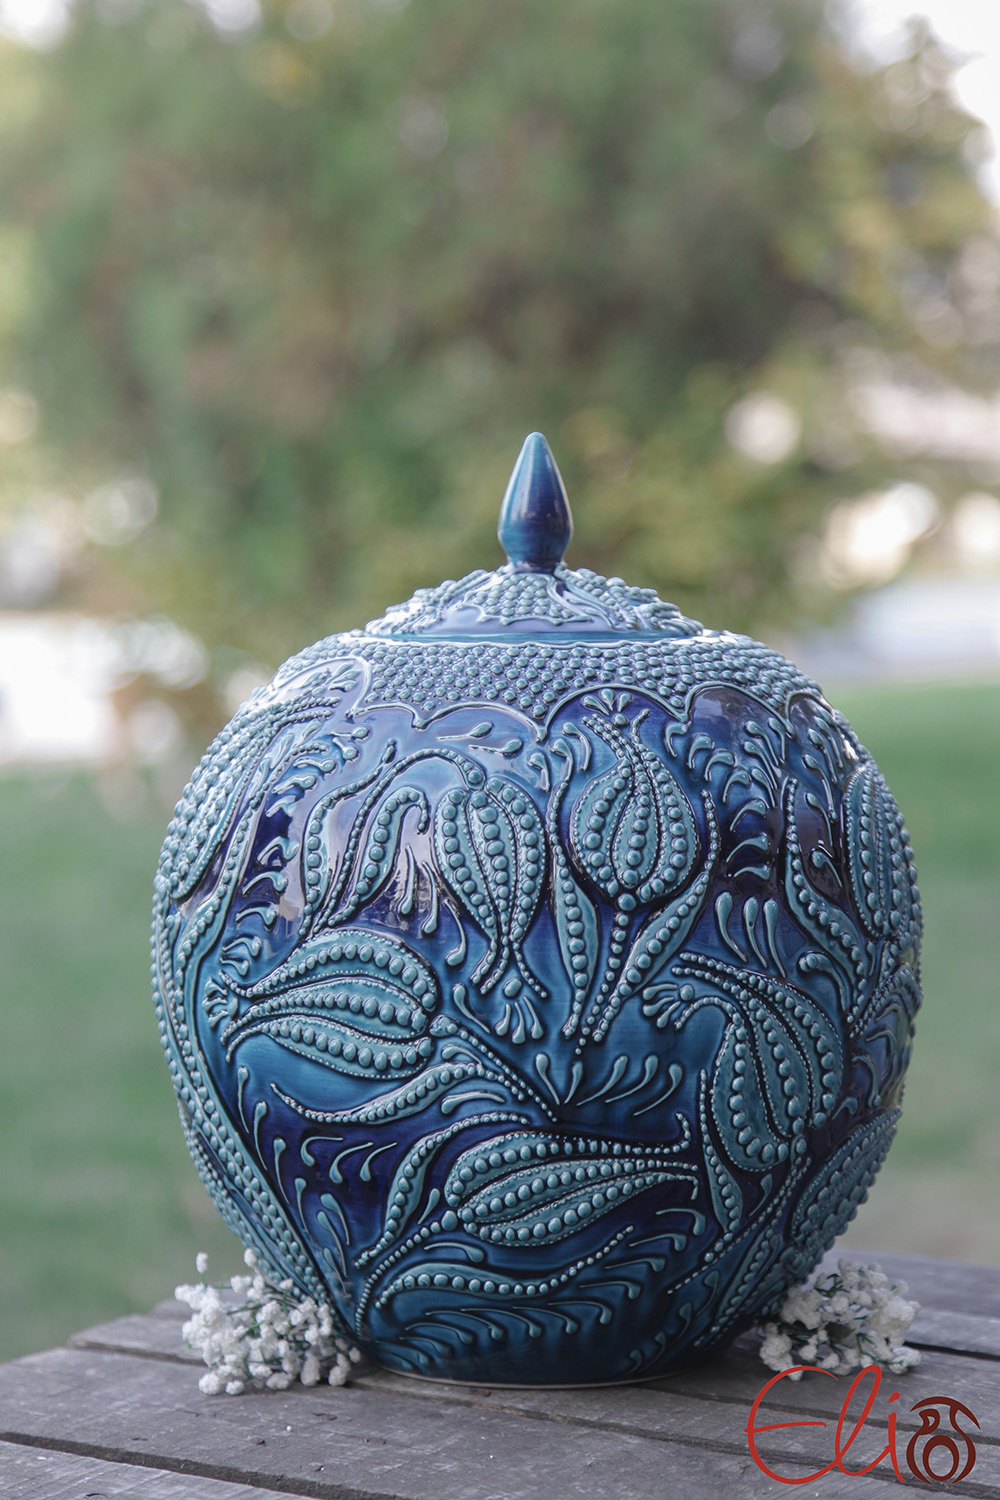 Ceramic Sphere Jar 12″